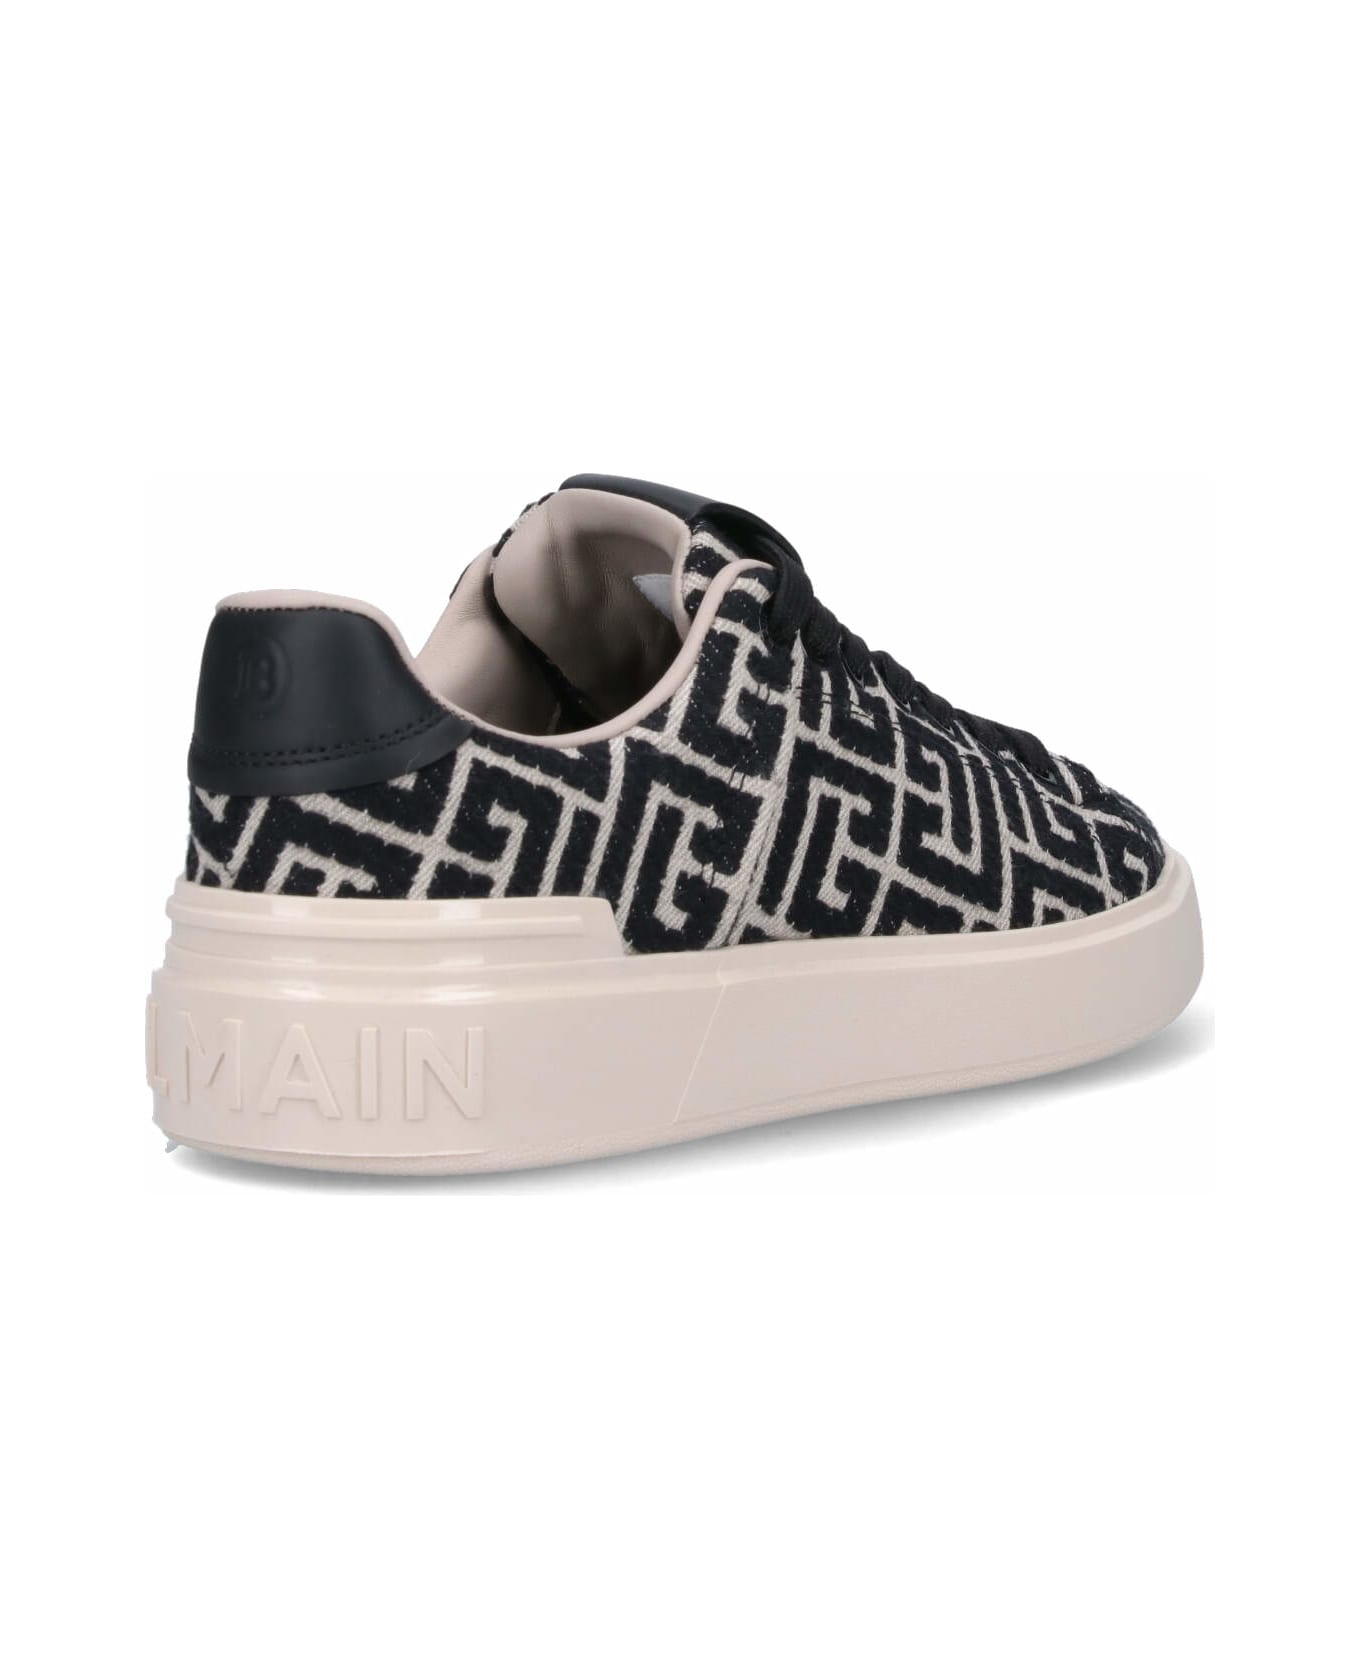 Balmain Canvas Sneakers - White